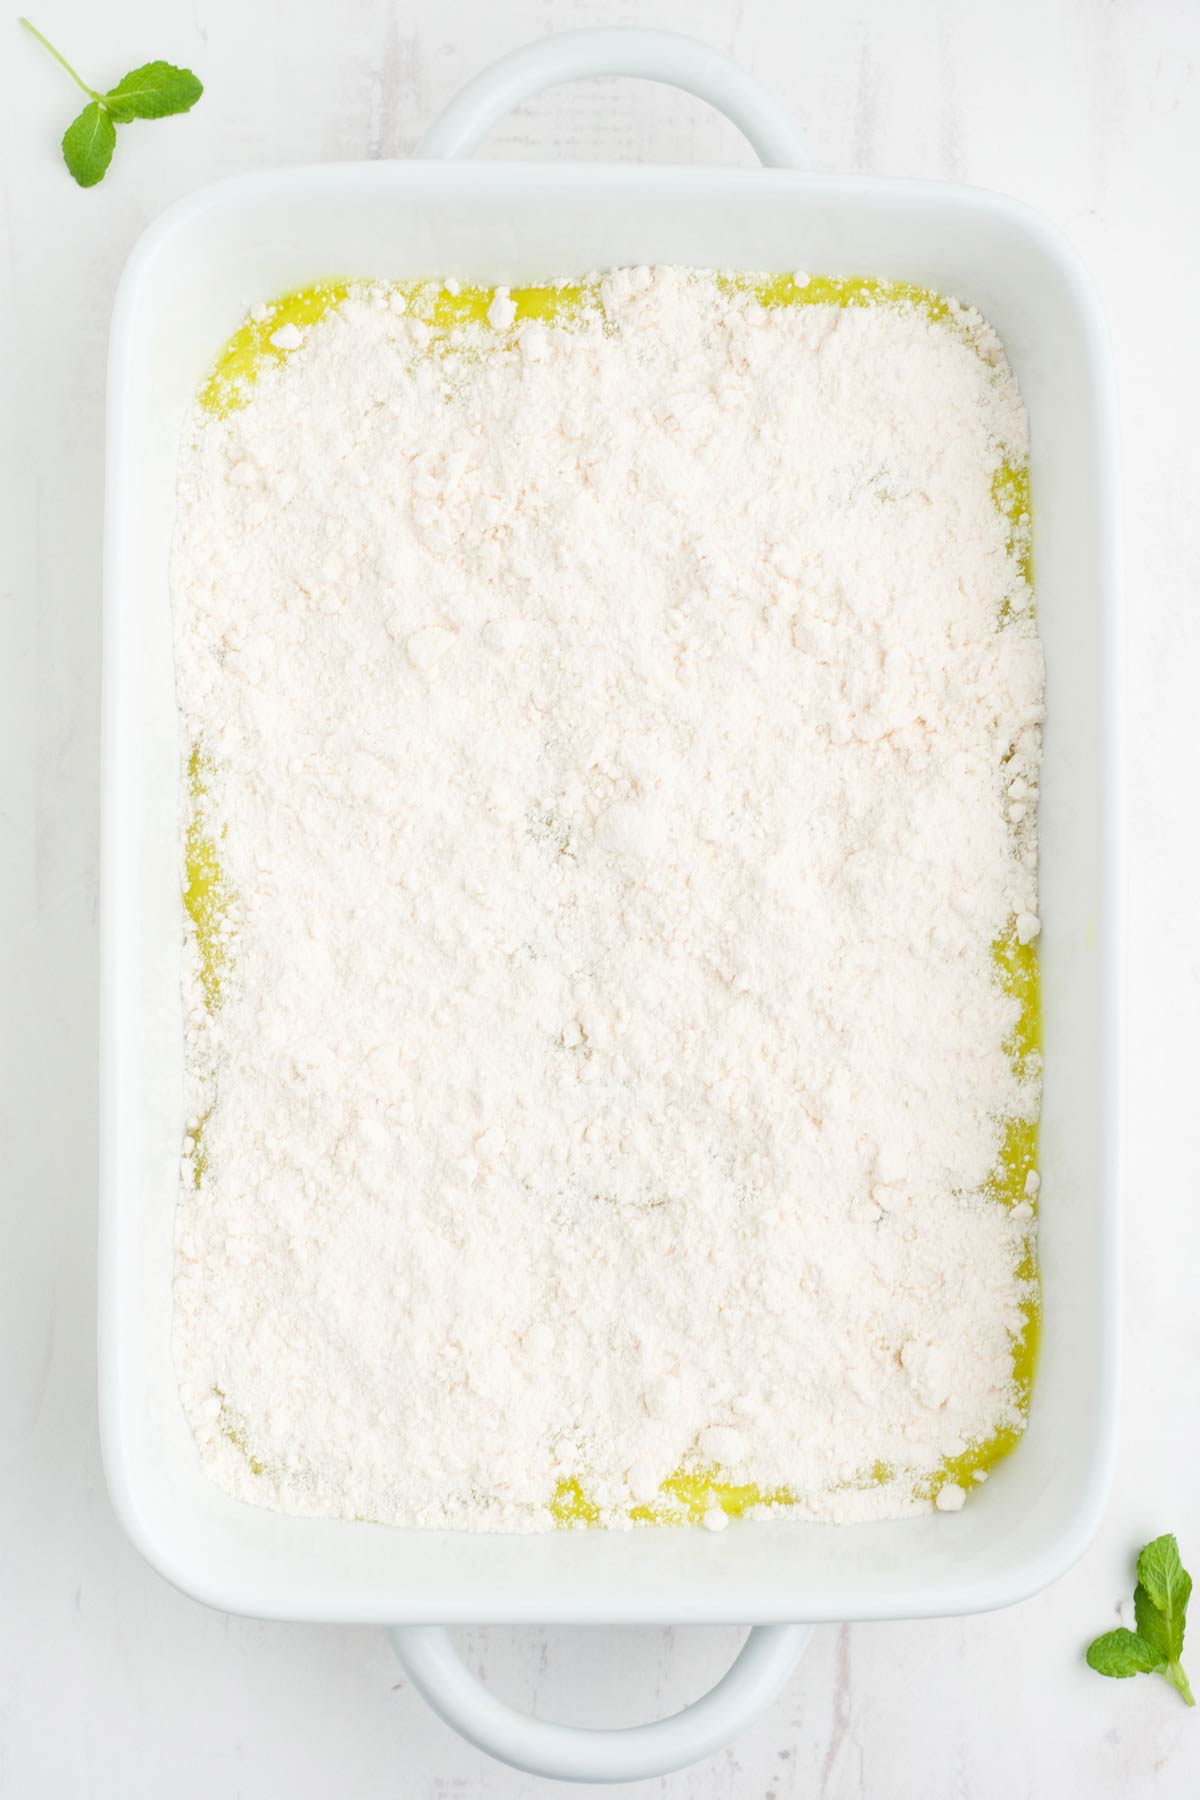 Cake mix sprinkled over the lemon filling.